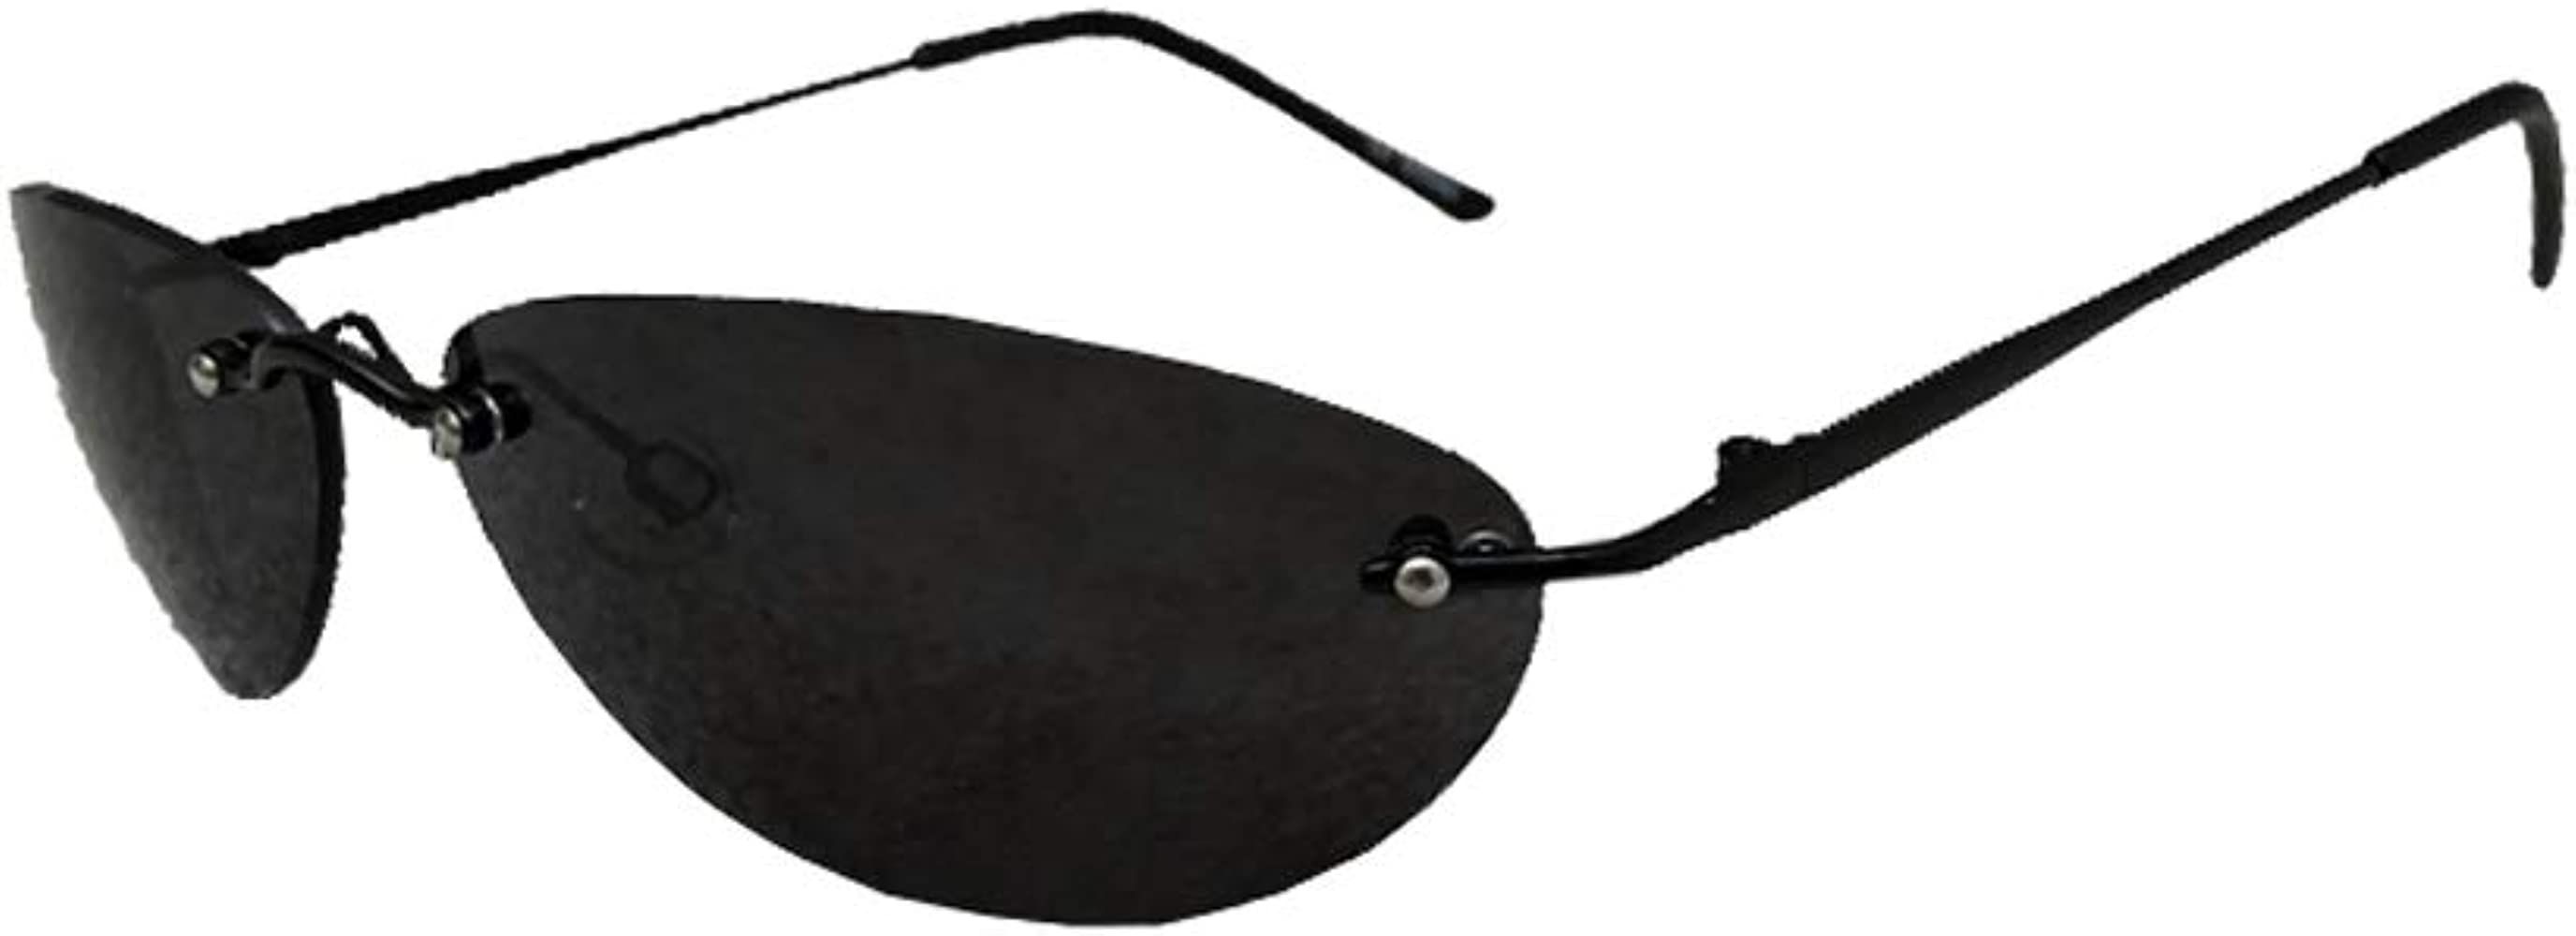 Matrix Neo Sunglasses 20811 Black w/Smoke Lenses | Amazon (US)